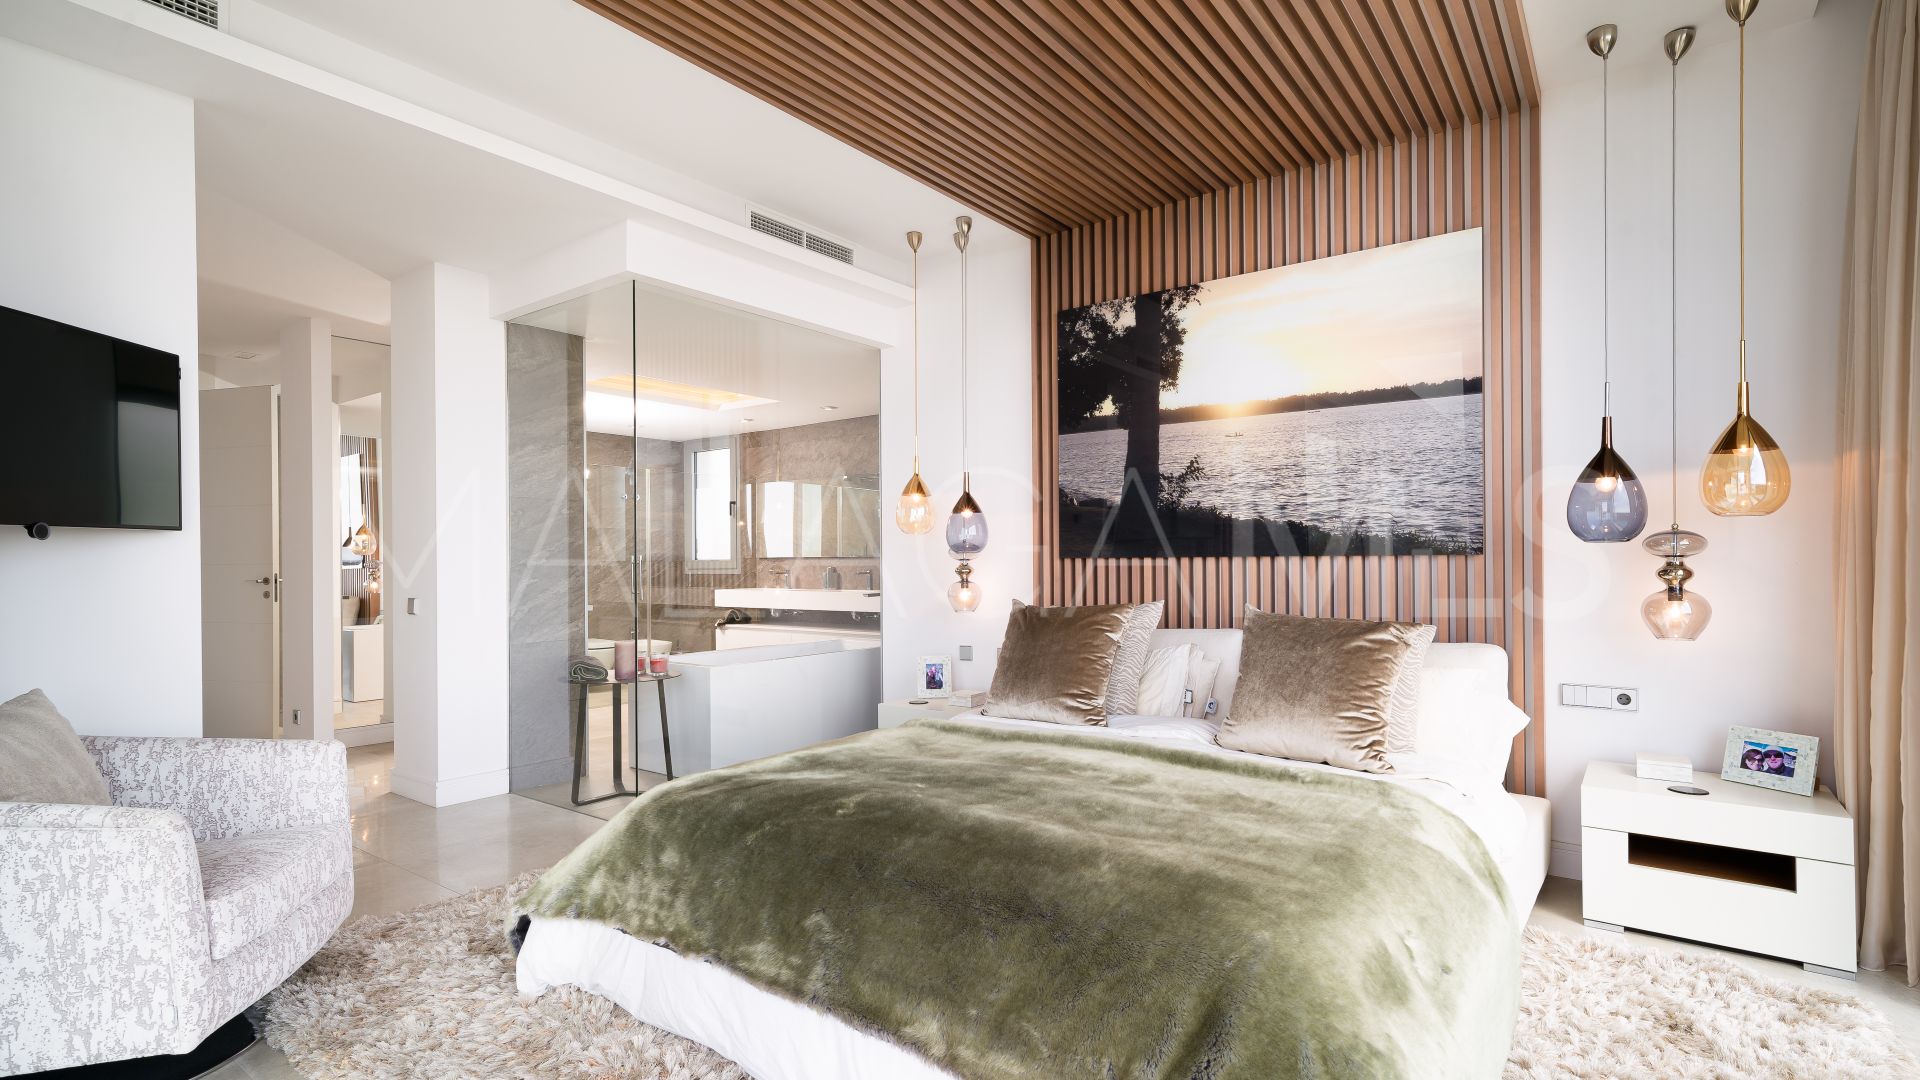 5 bedrooms villa in ICON for sale